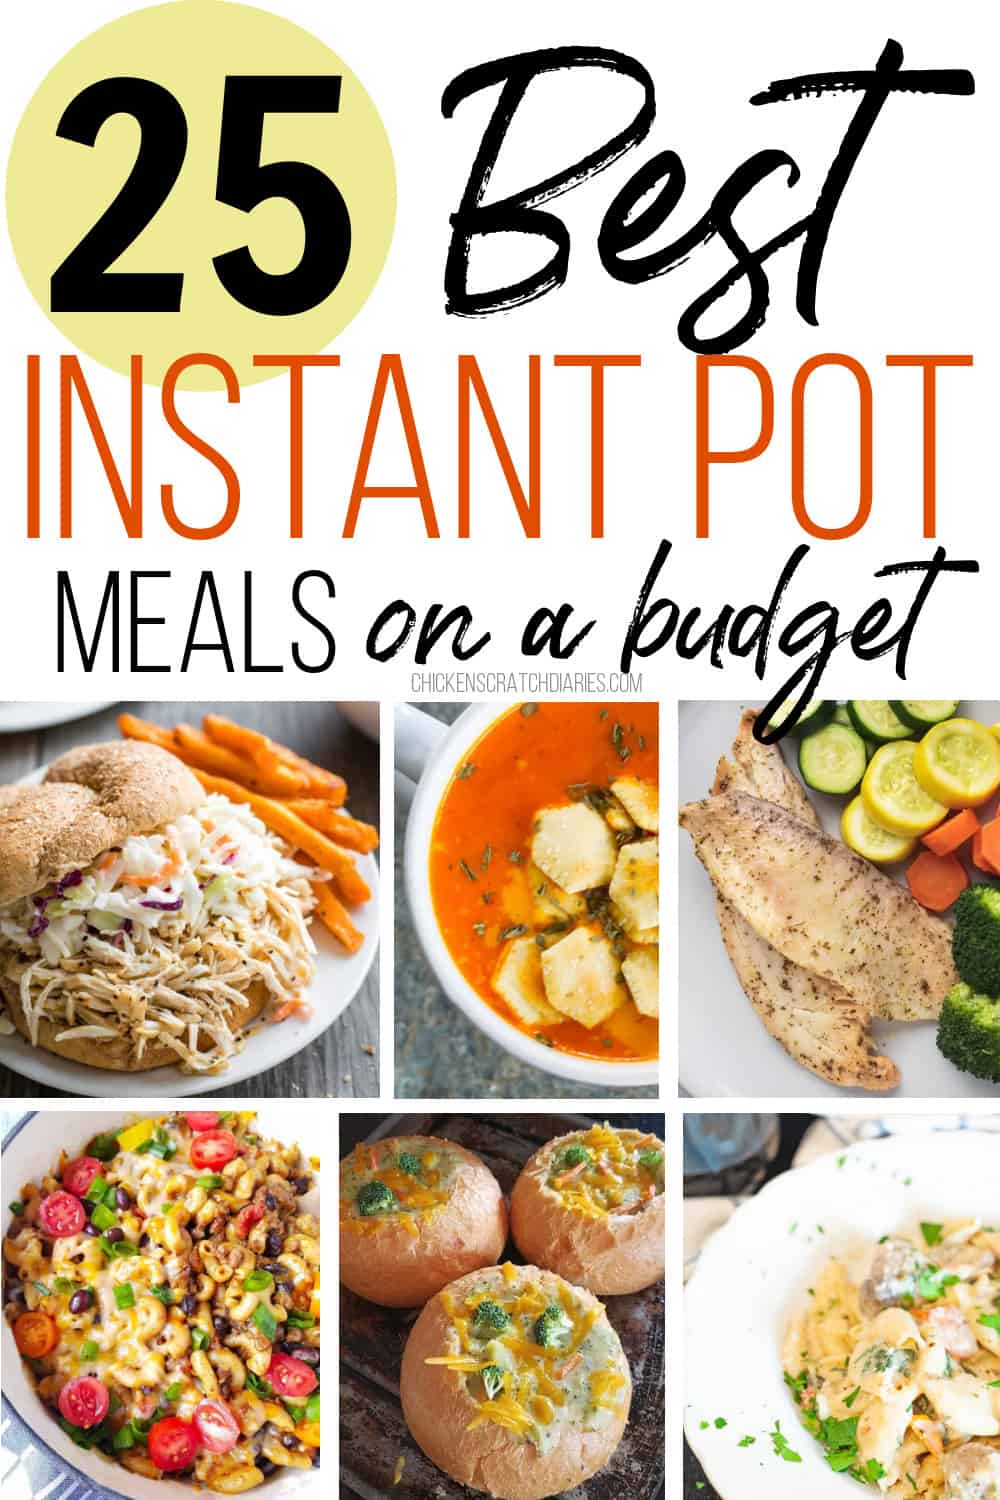 25 Cheap Instant Pot Meals: Eat Well on a Budget » Chicken Scratch Diaries